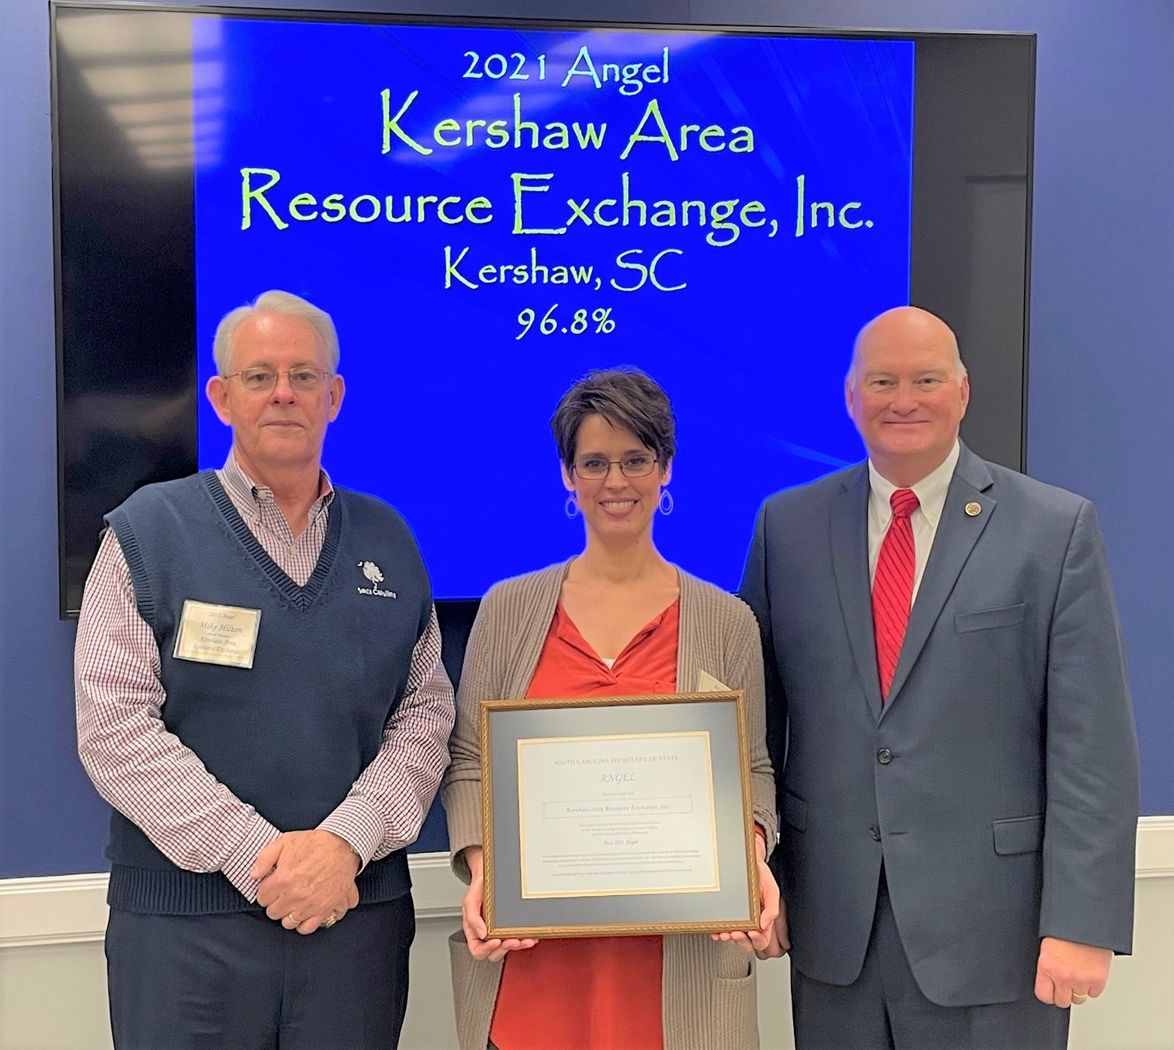 Secretary Hammond with Kershaw Area Resource Exchange, Inc